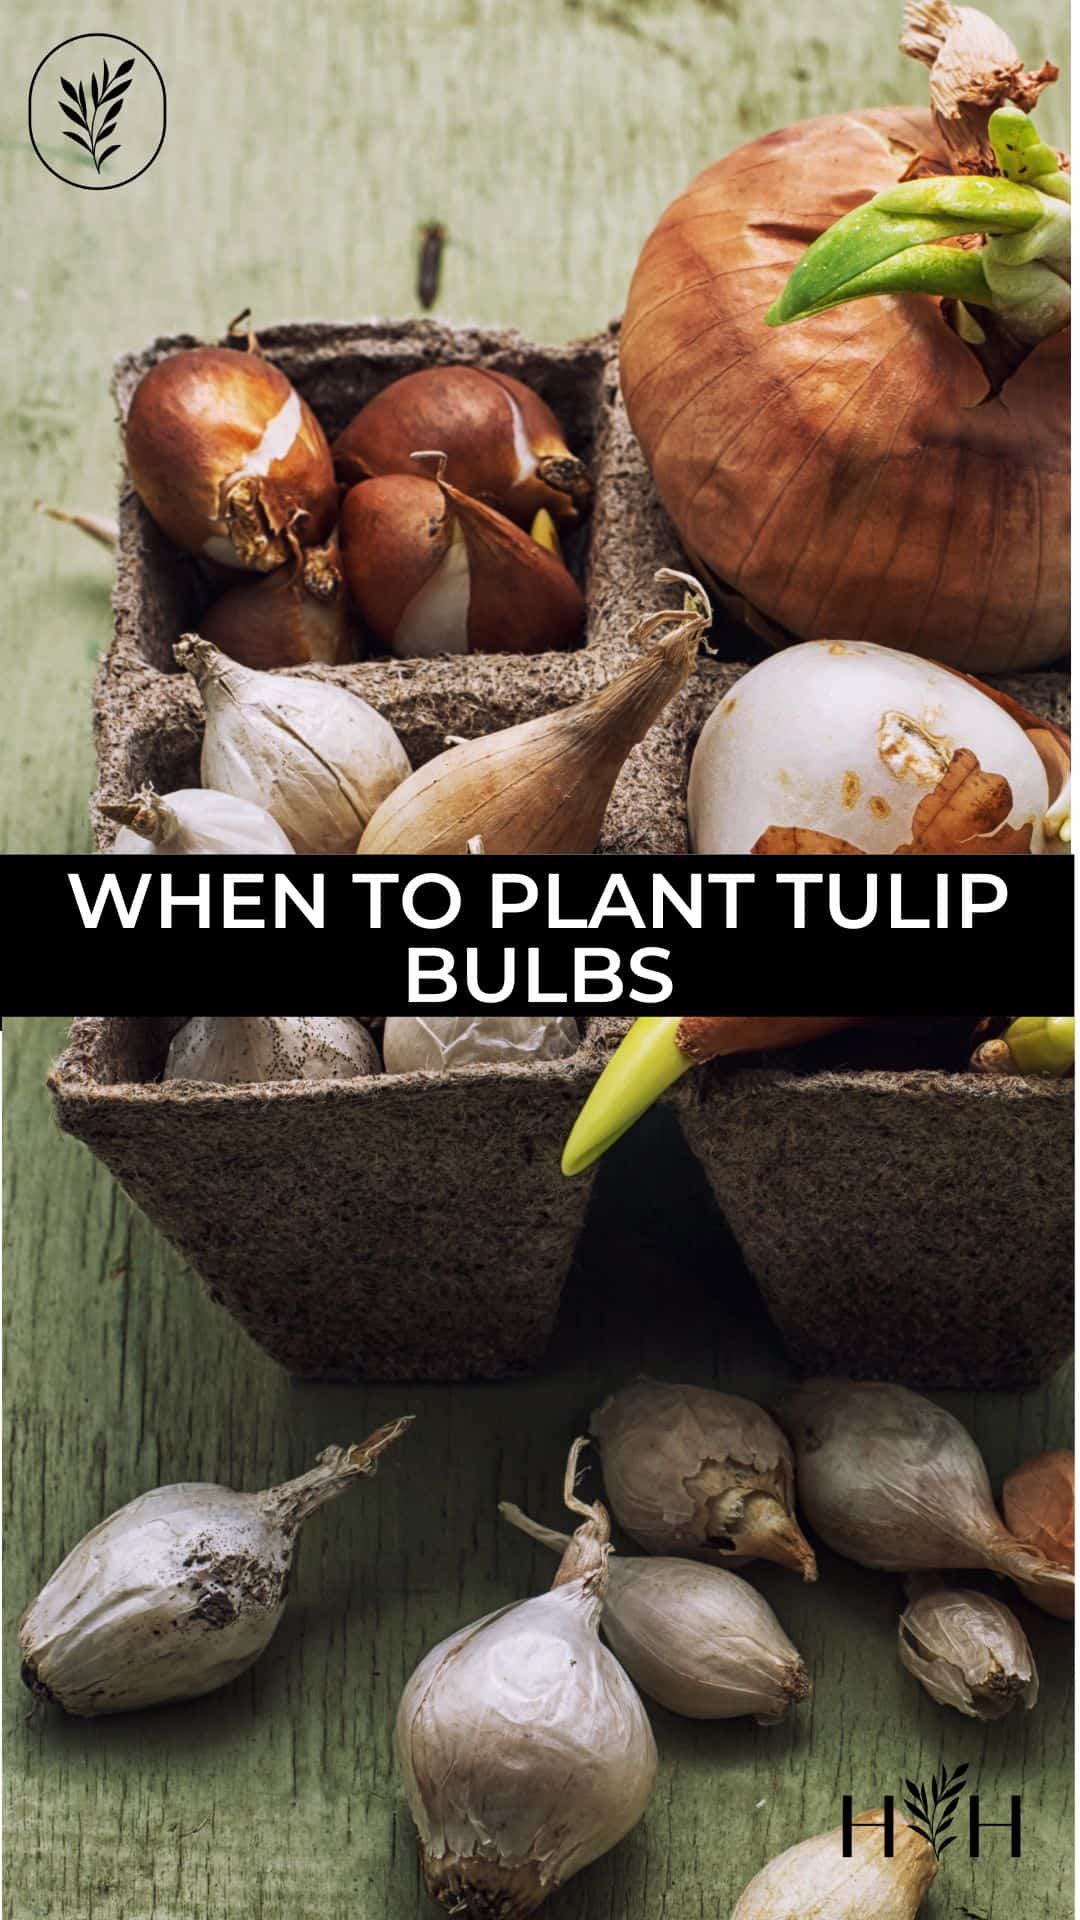 When to plant tulip bulbs via @home4theharvest